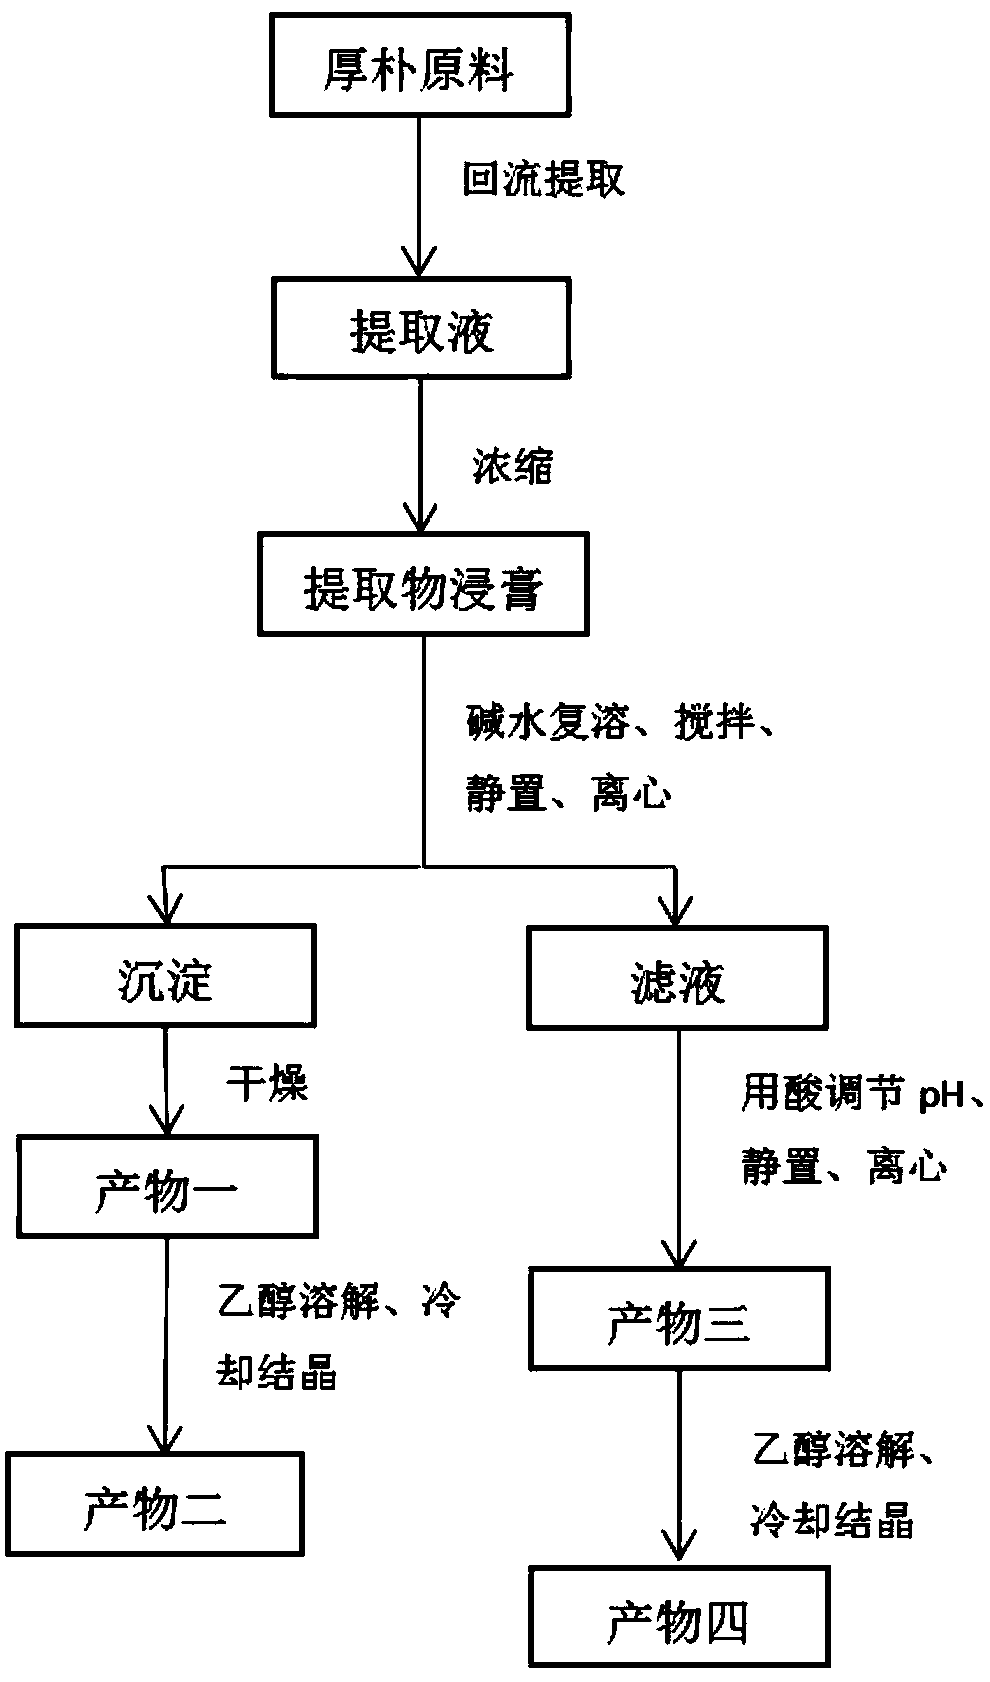 Green separation technique for preparing magnolol and honokiol monomer from mangnolia officinalis raw material